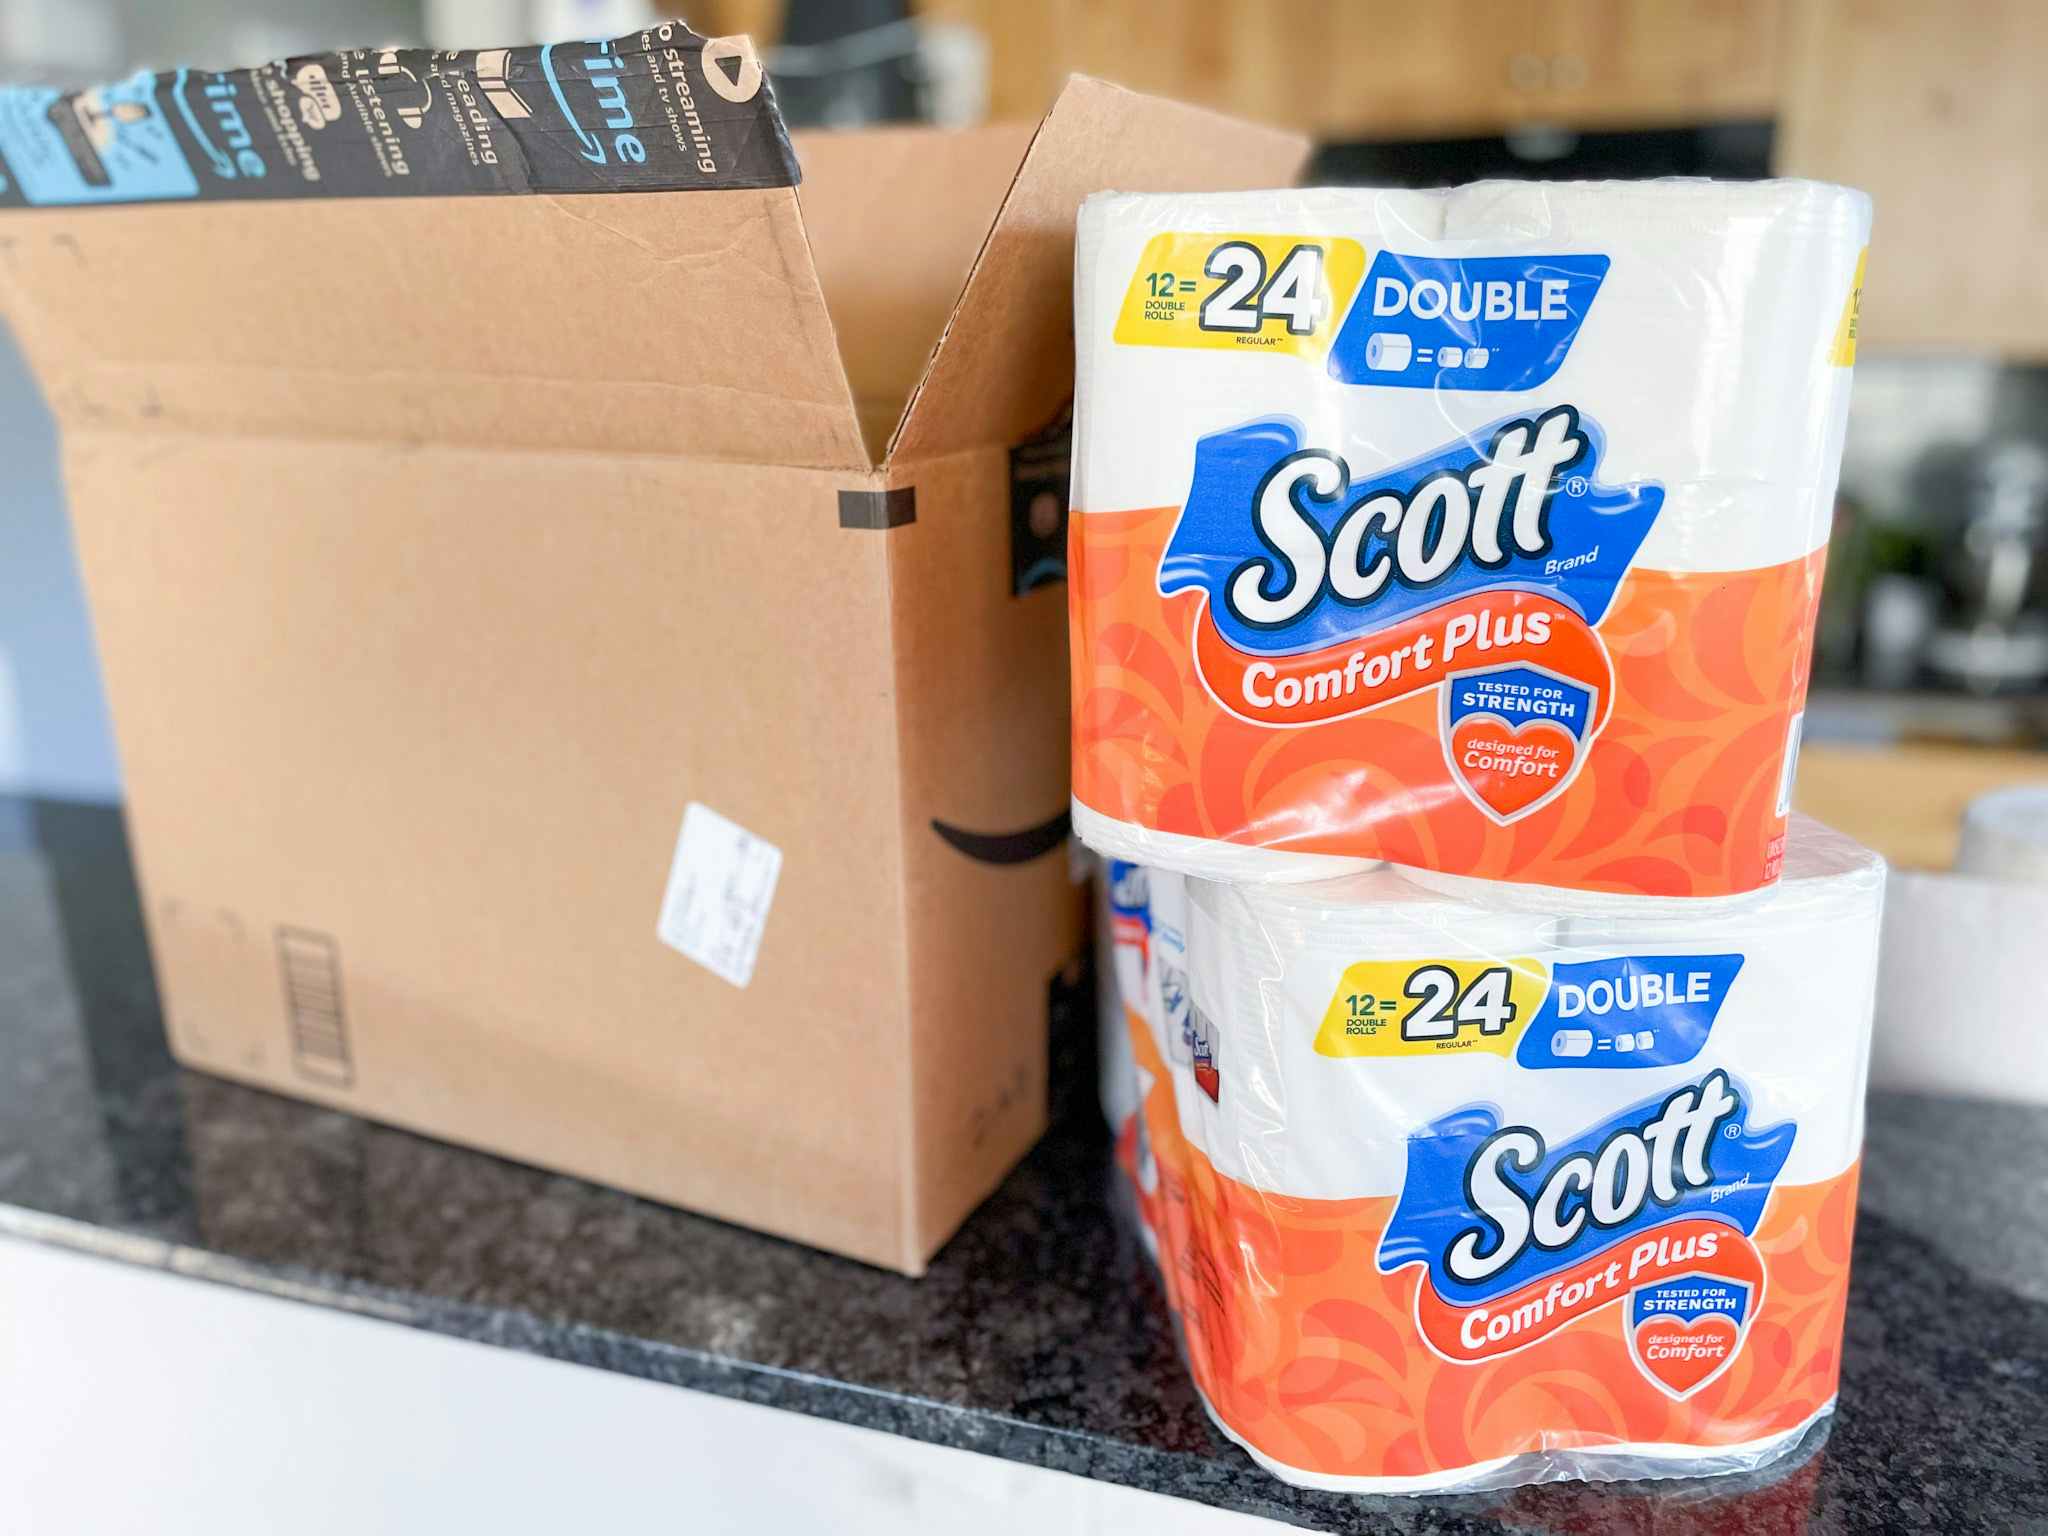 Scott ComfortPlus Toilet Paper: Get 12 Double Rolls for $3.89 on Amazon